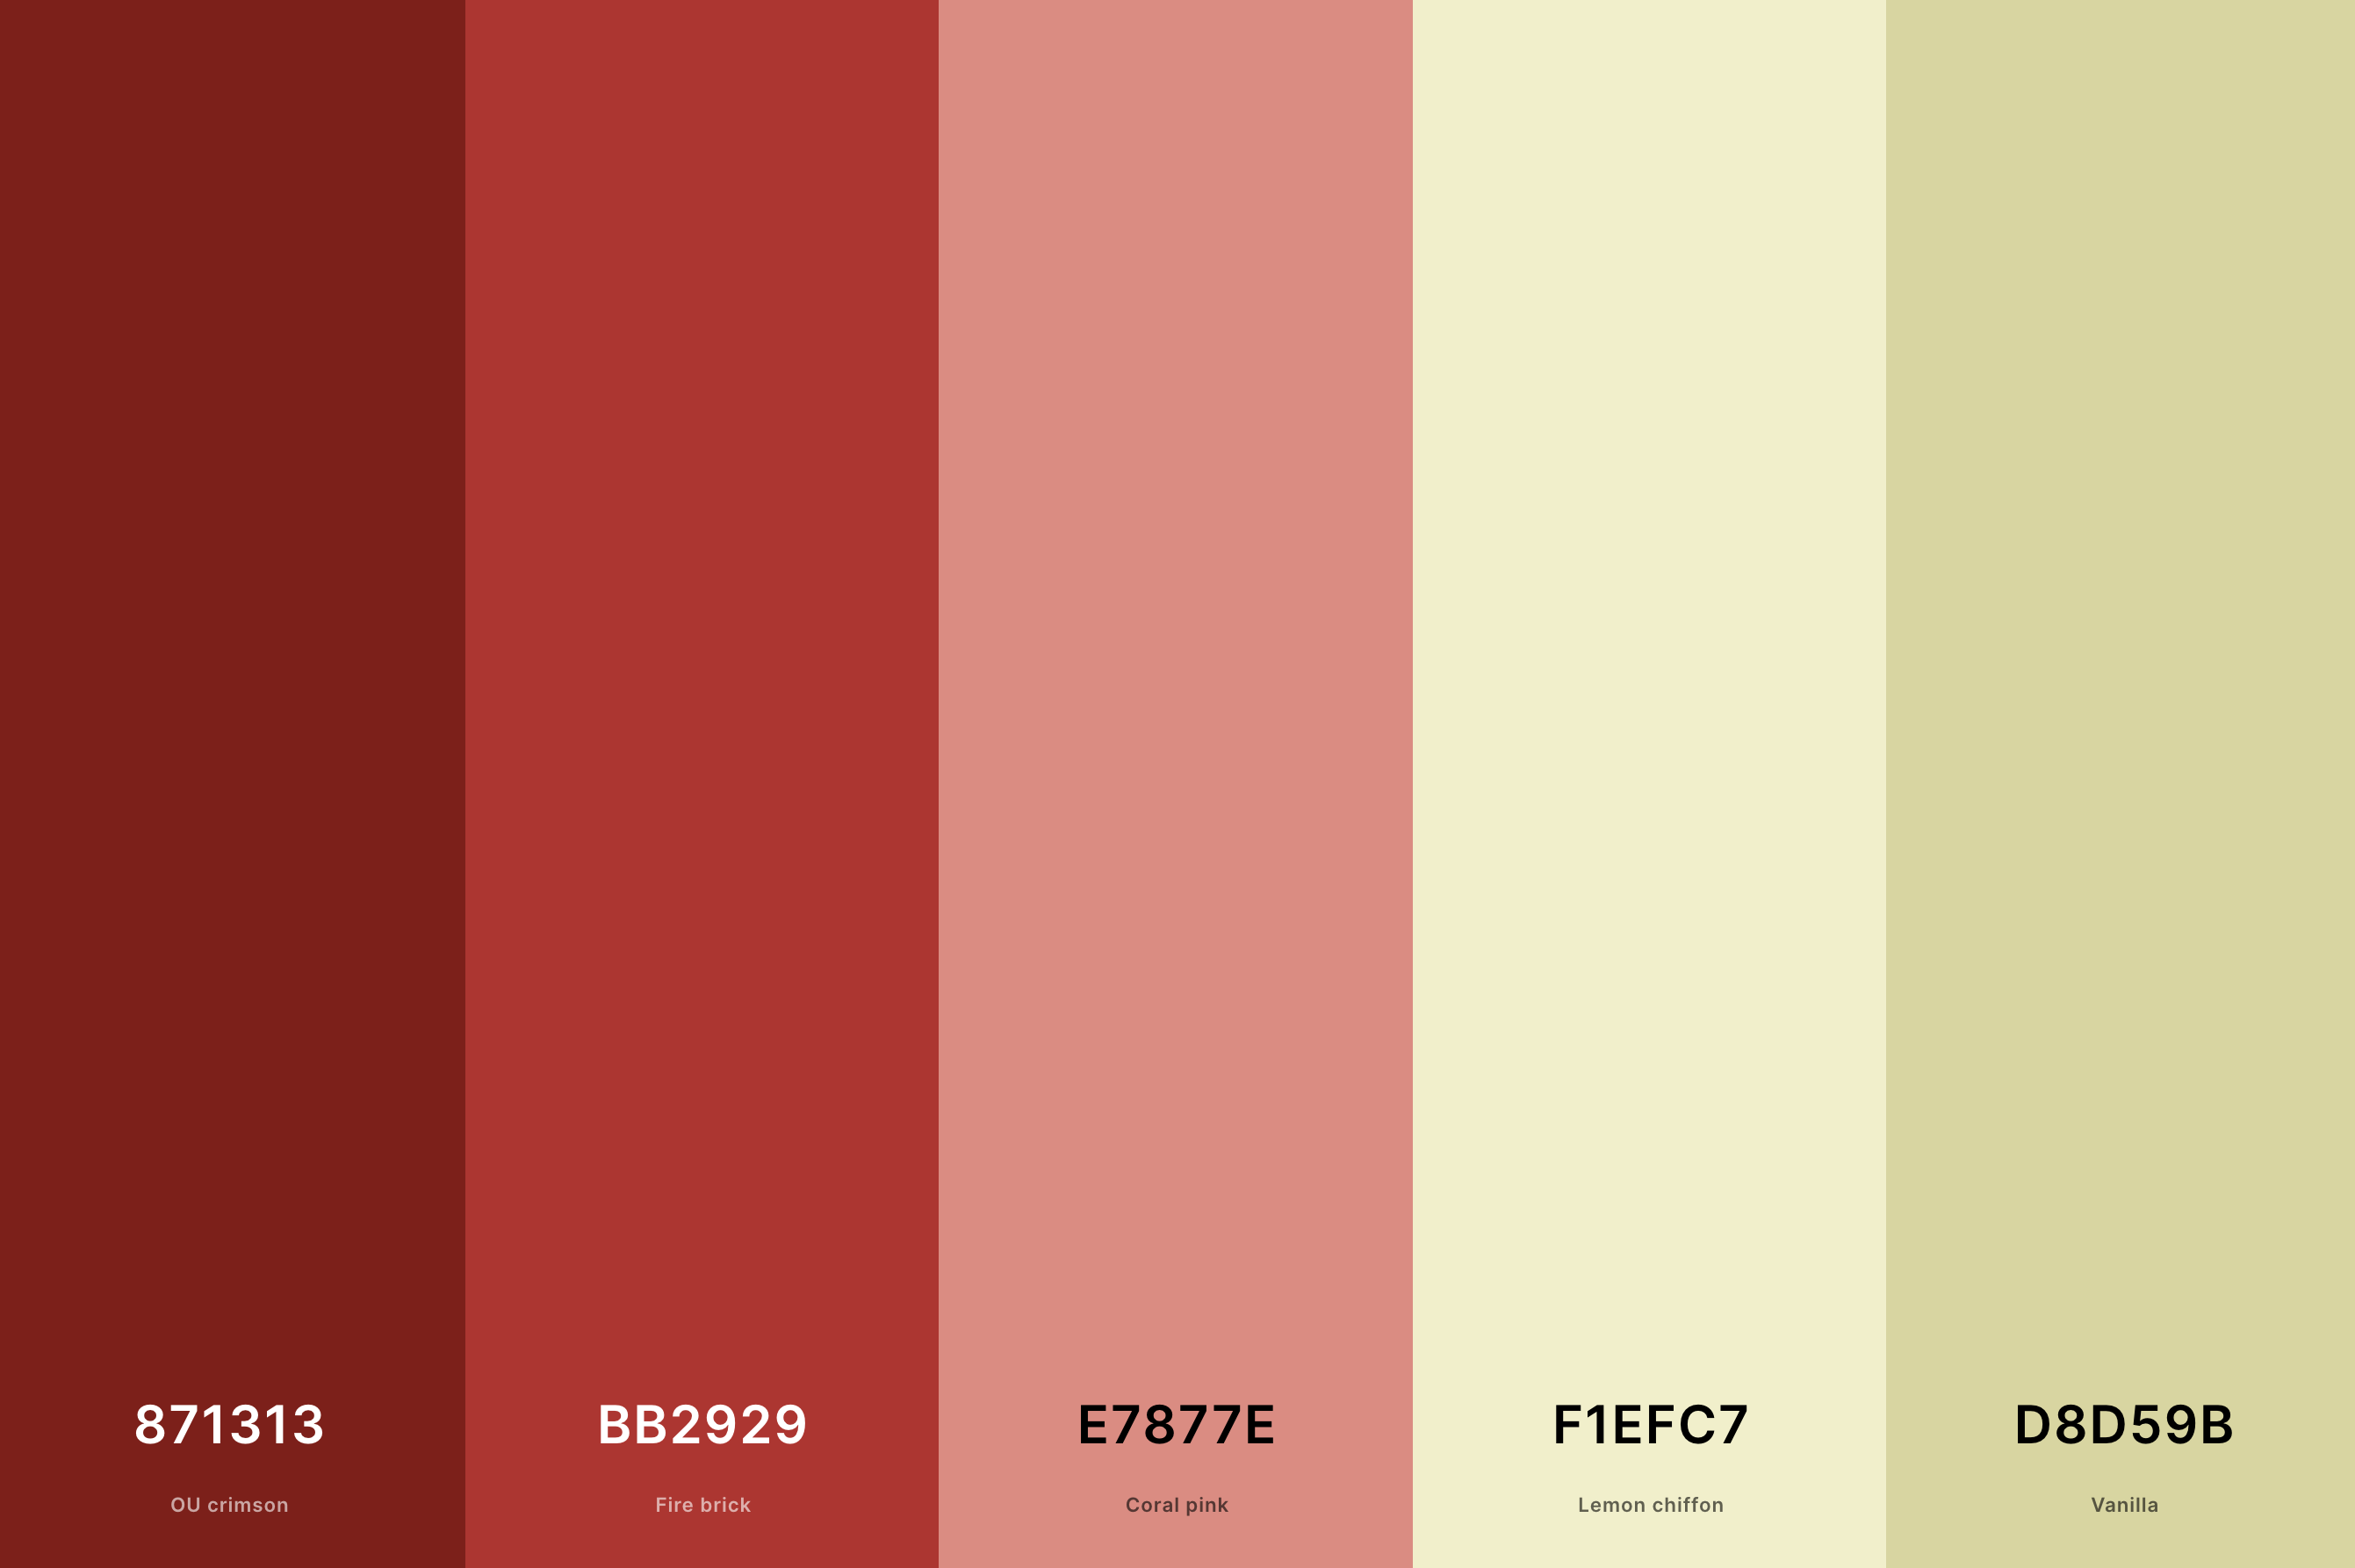 20. Red And Cream Color Palette Color Palette with Ou Crimson (Hex #871313) + Fire Brick (Hex #BB2929) + Coral Pink (Hex #E7877E) + Lemon Chiffon (Hex #F1EFC7) + Vanilla (Hex #D8D59B) Color Palette with Hex Codes